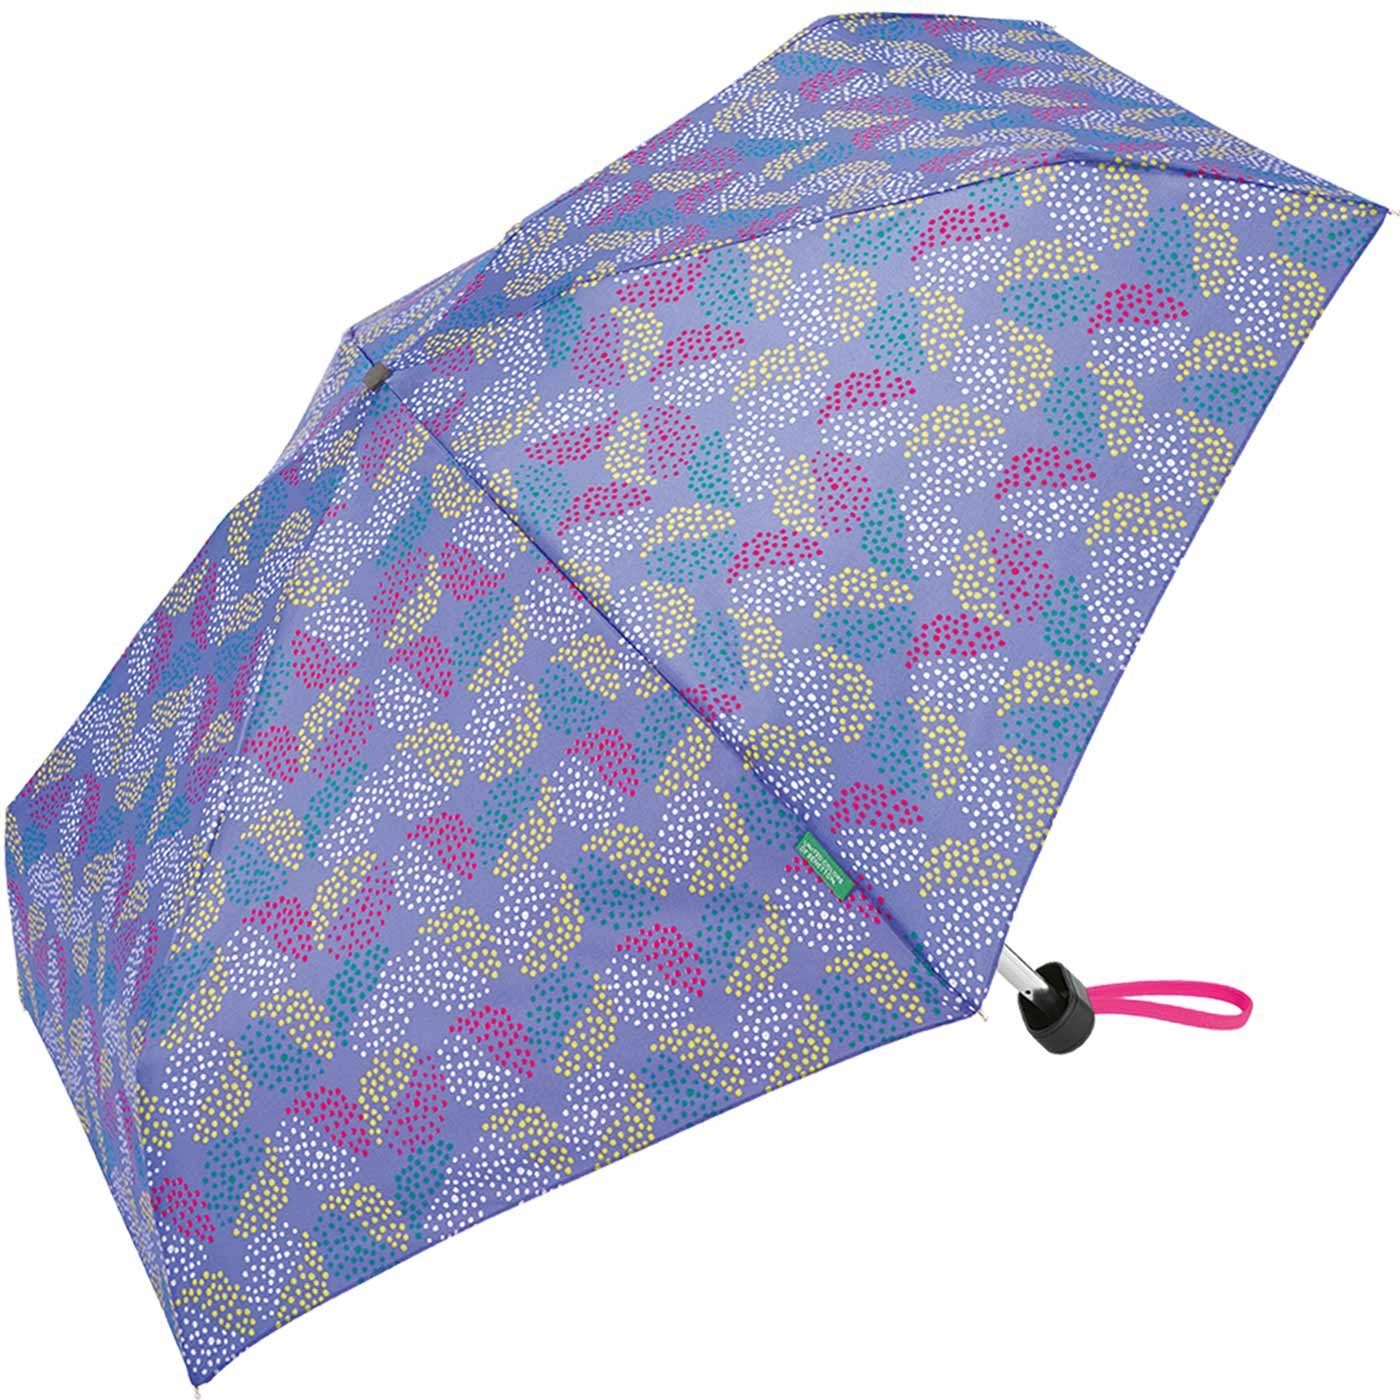 Taschenregenschirm periwinkle, modernem mit Flat deep of Mini Dots Benetton Pop United Colors Punkte-Kreise-Muster violett Ultra -